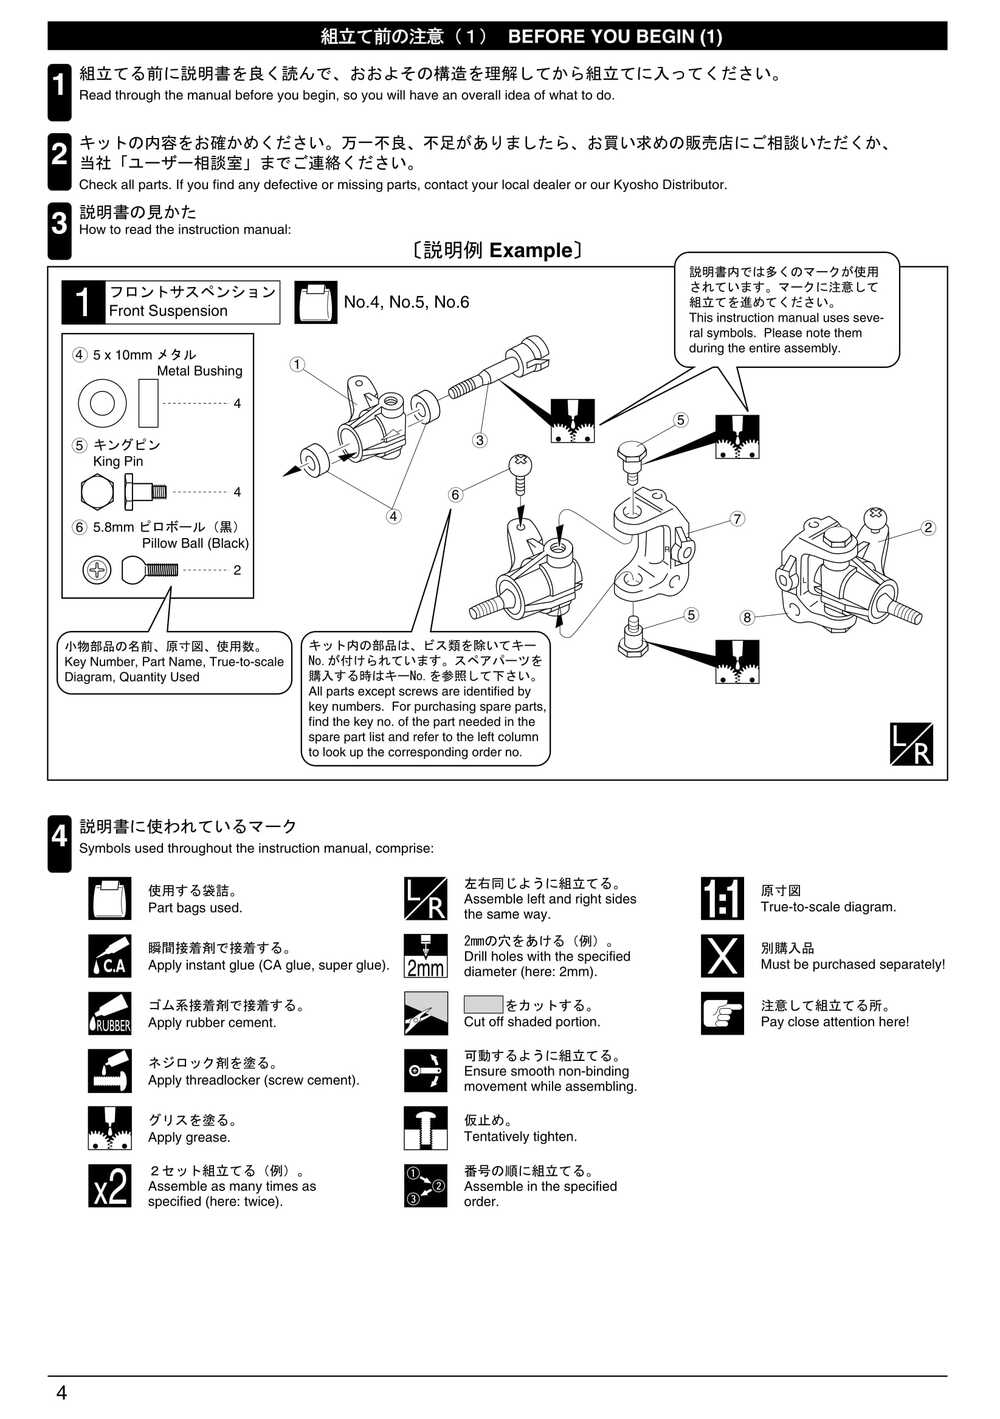 Kyosho - 31041 - Fantom Sports - Manual - Page 04